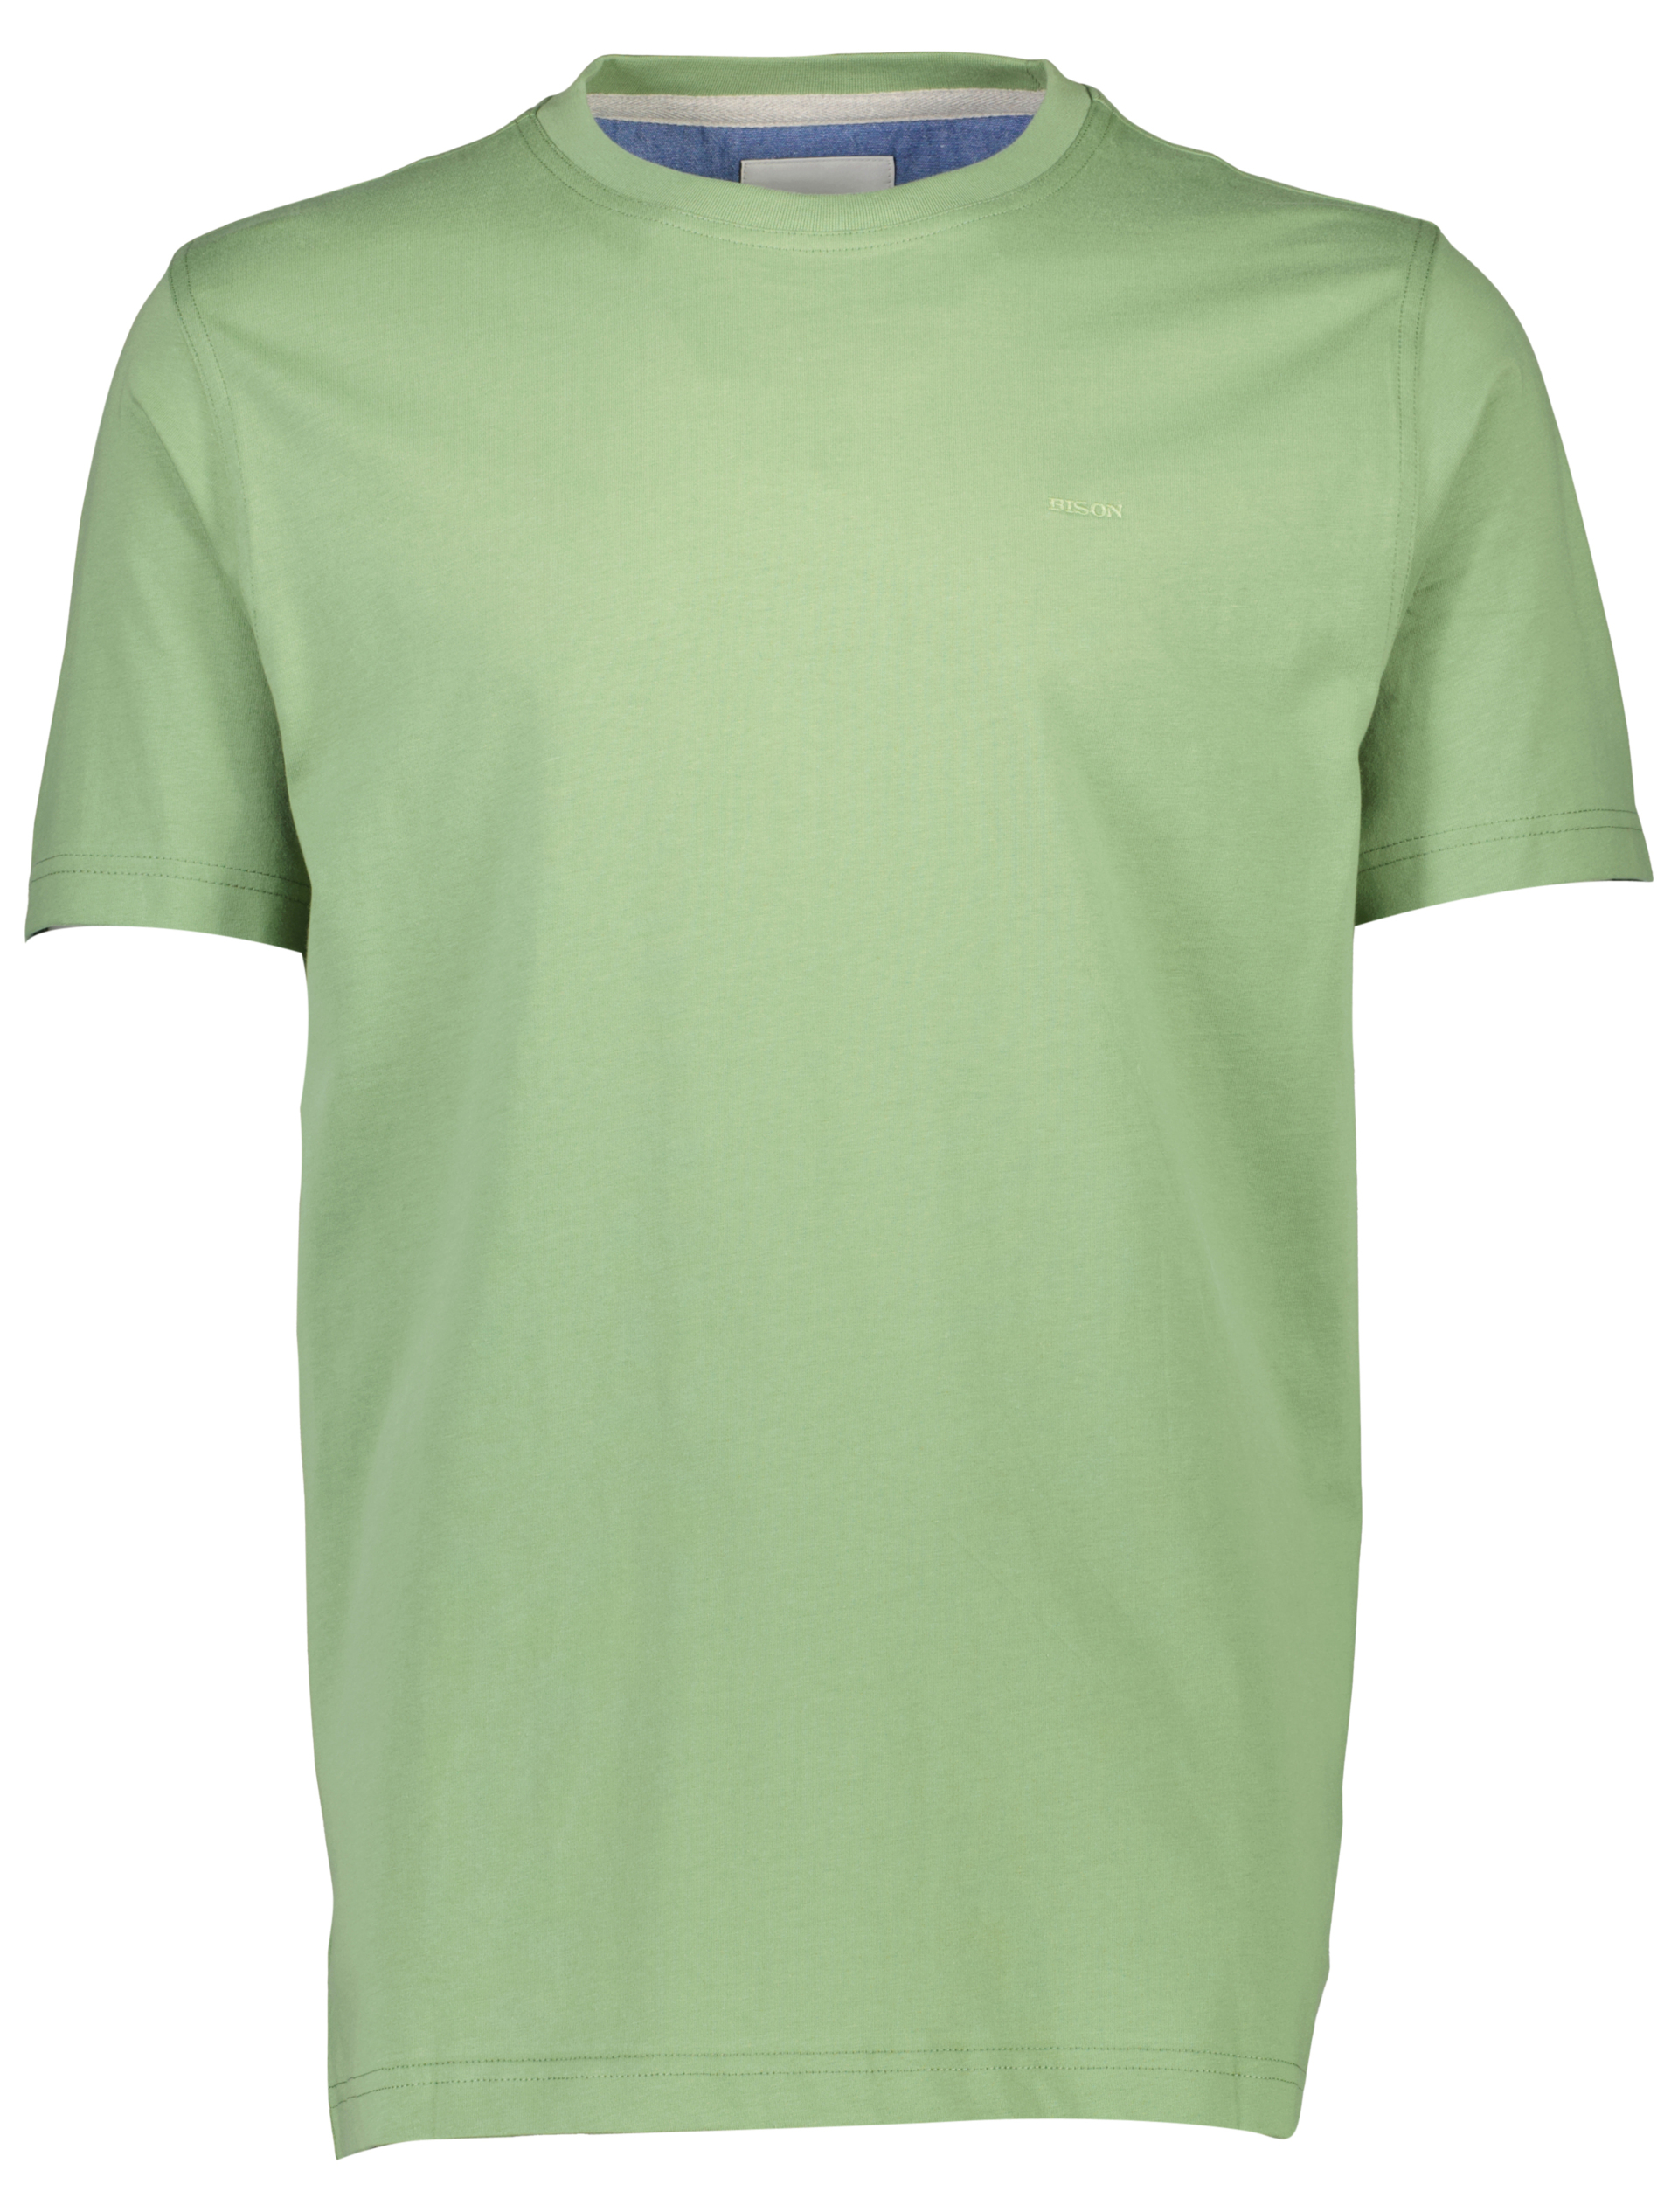 Bison T-shirt grøn / lt green 224